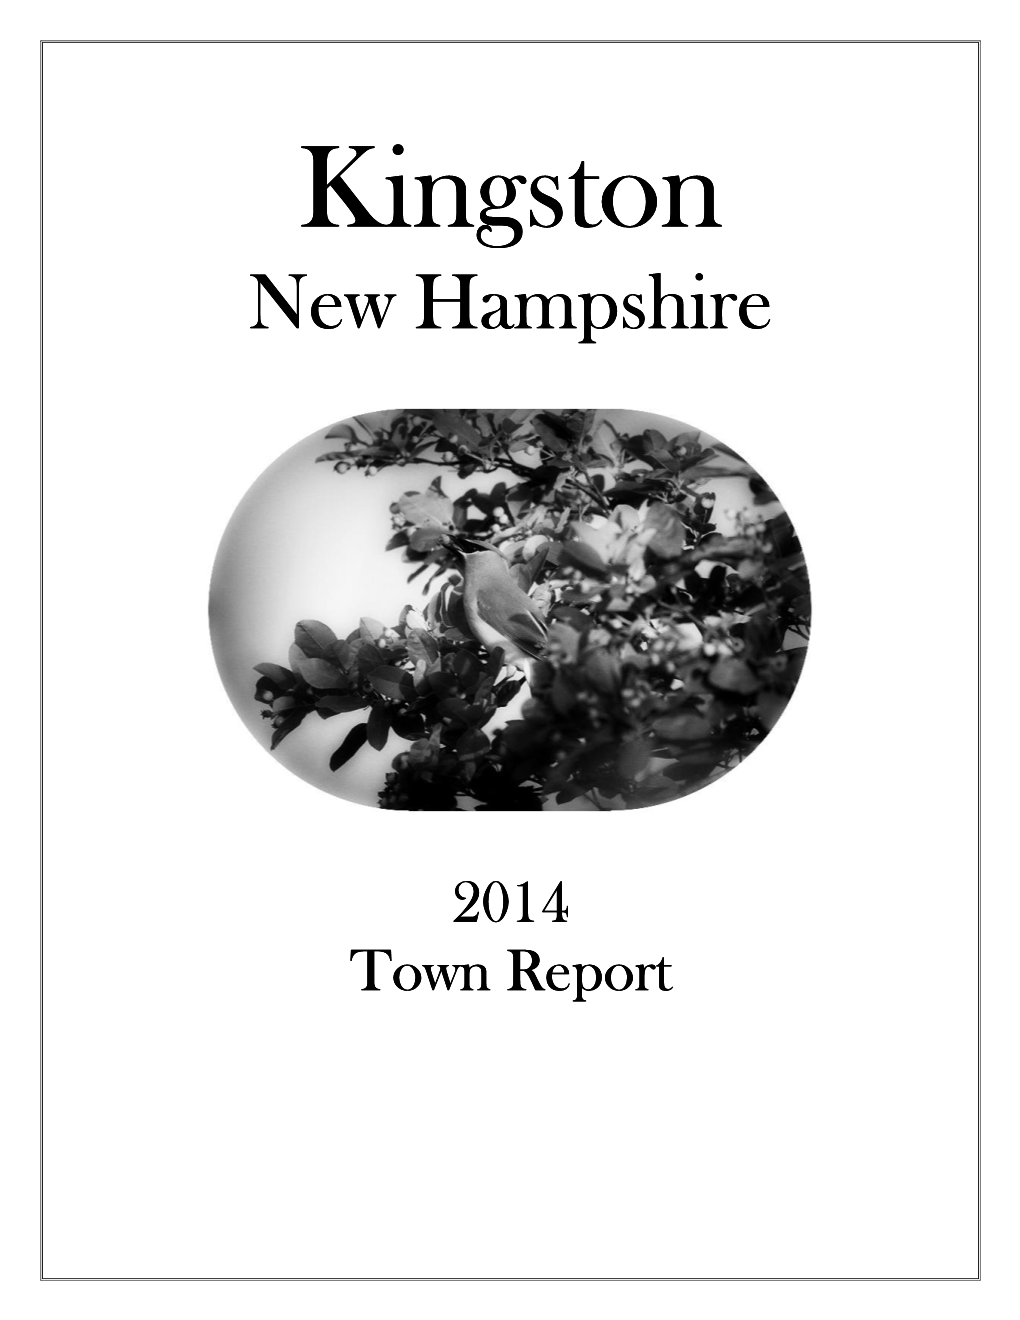 New Hampshire New Hampshire